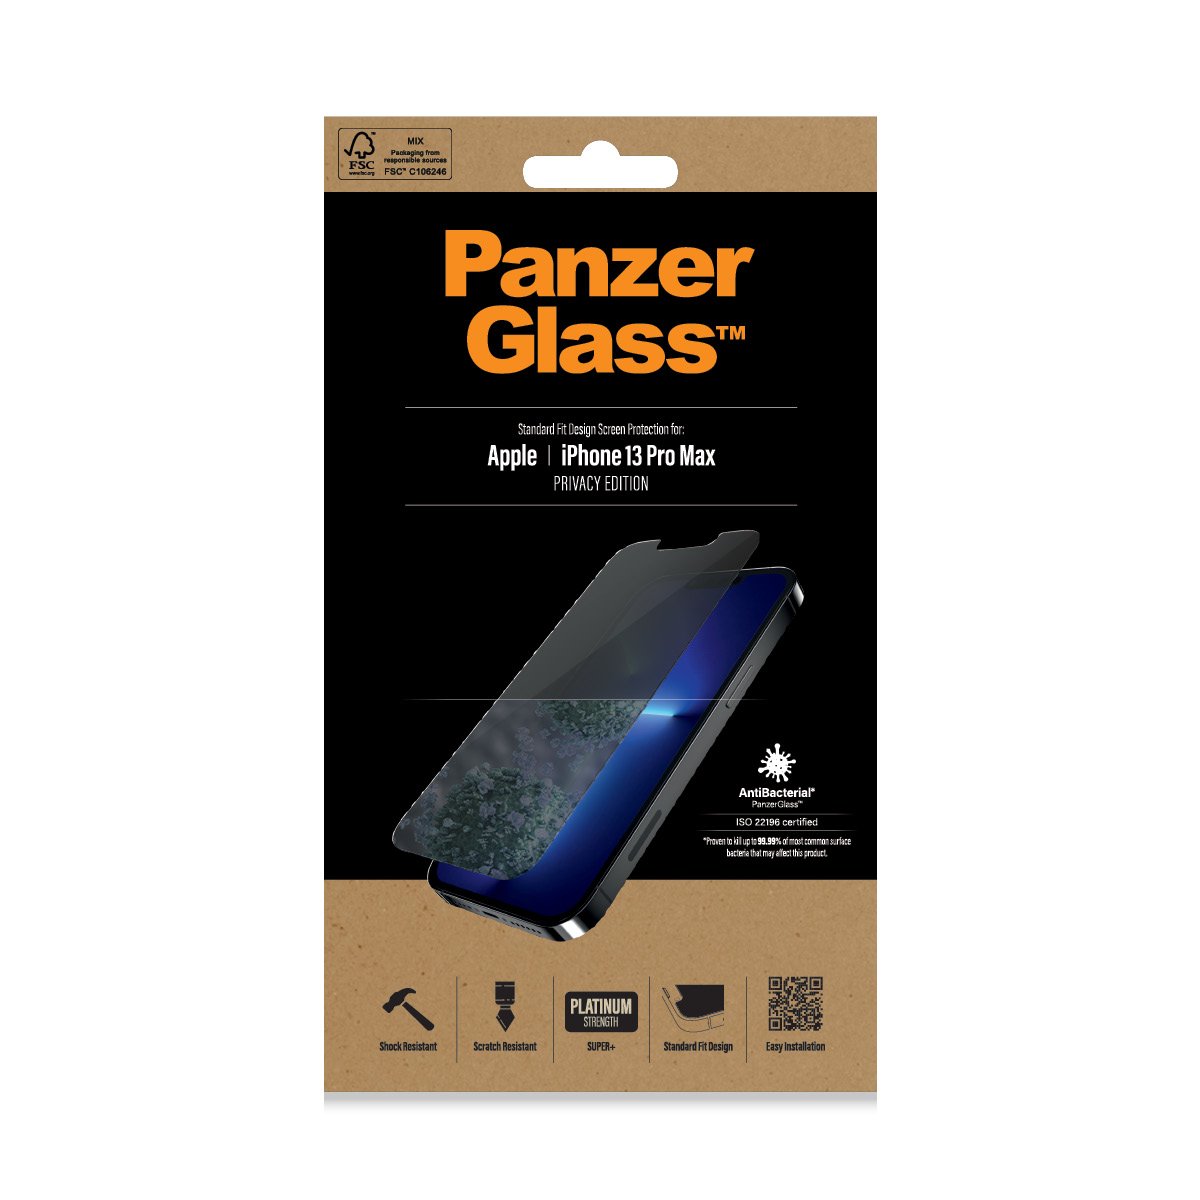 PanzerGlass iPhone 13 Pro Max AntiBacterial Screen Protector - Privacy